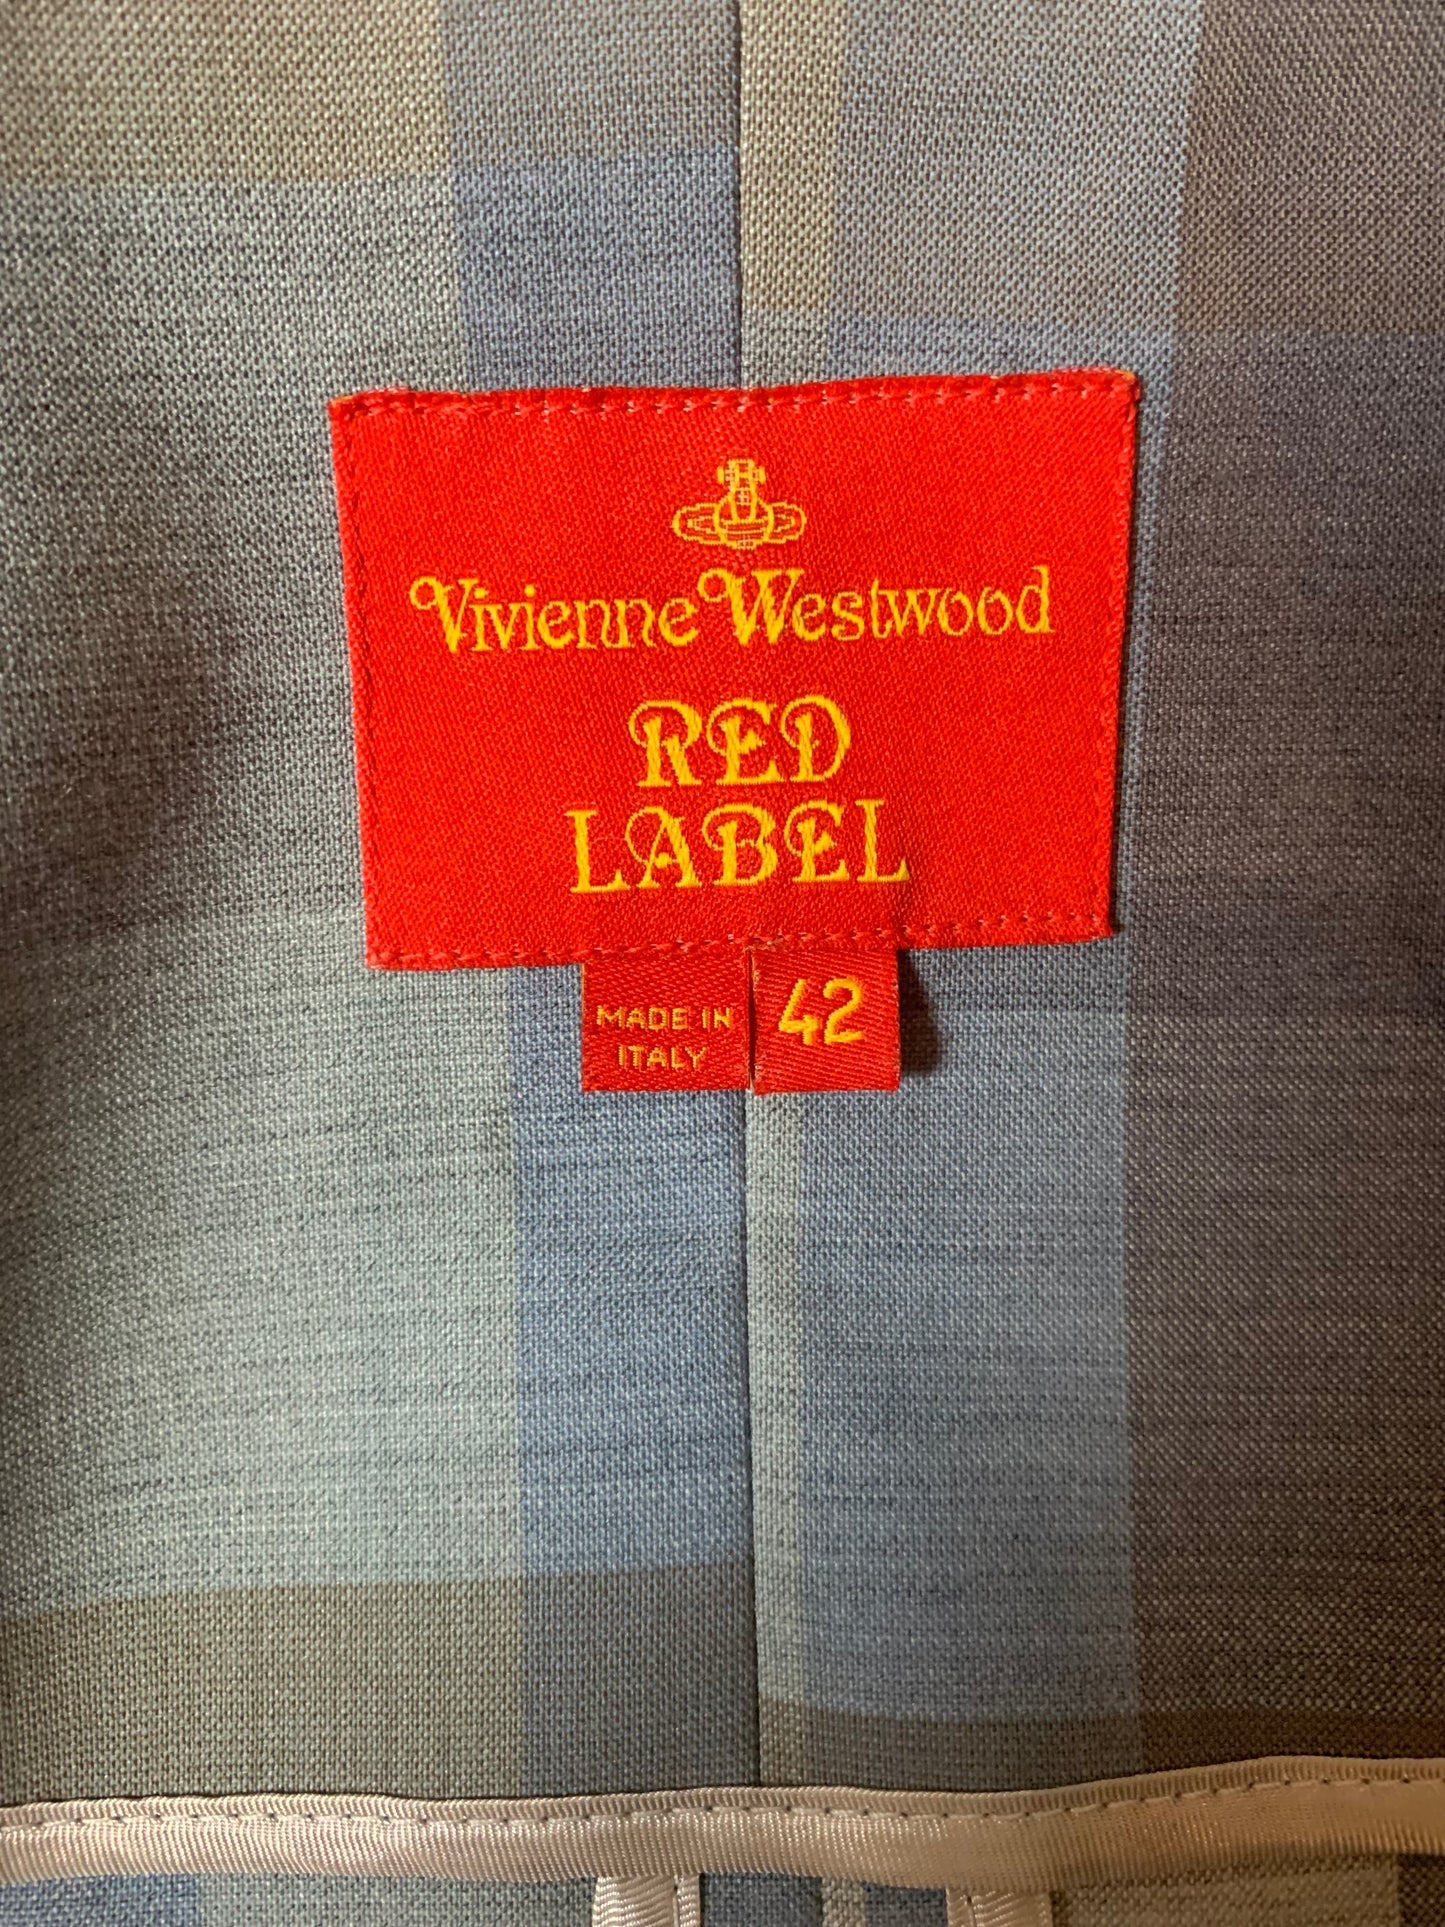 Vivienne Westwood SS 2013 Skirt Suit